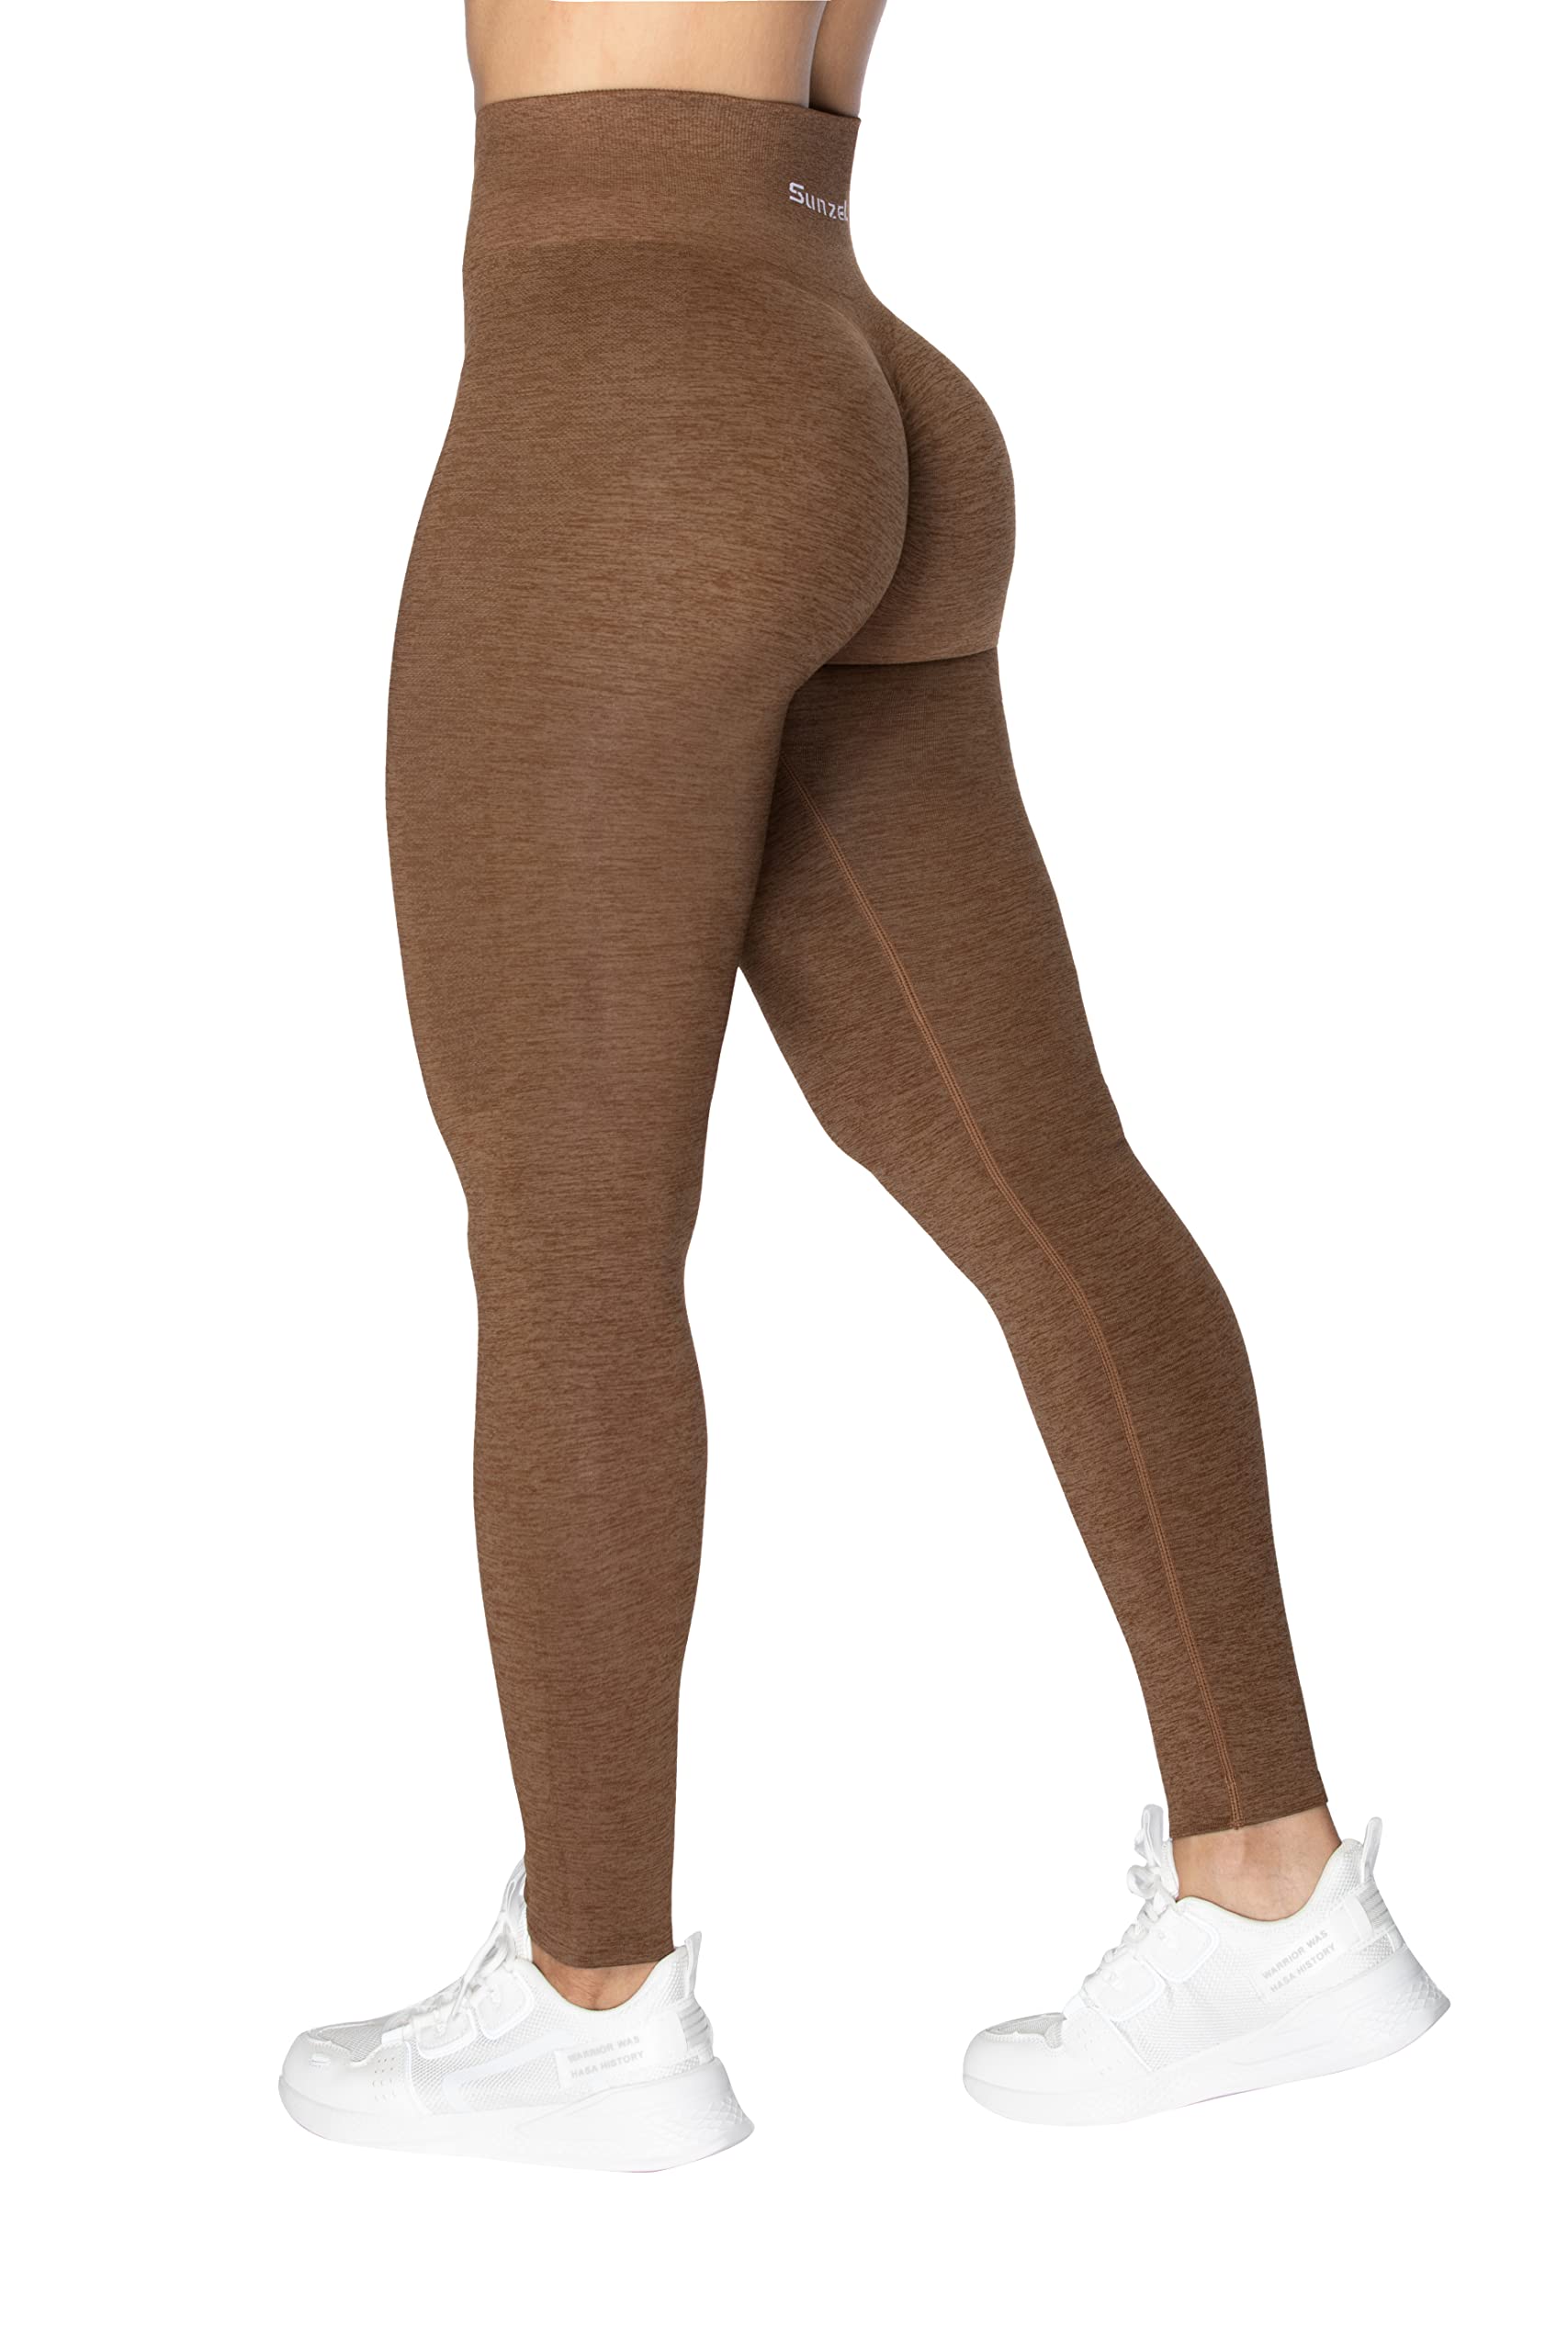 Buy Sunzel Scrunch Butt Lifting Leggings Women High Waisted Seamless Workout  Leggings Gym Booty Tights Tummy Control Yoga Pants